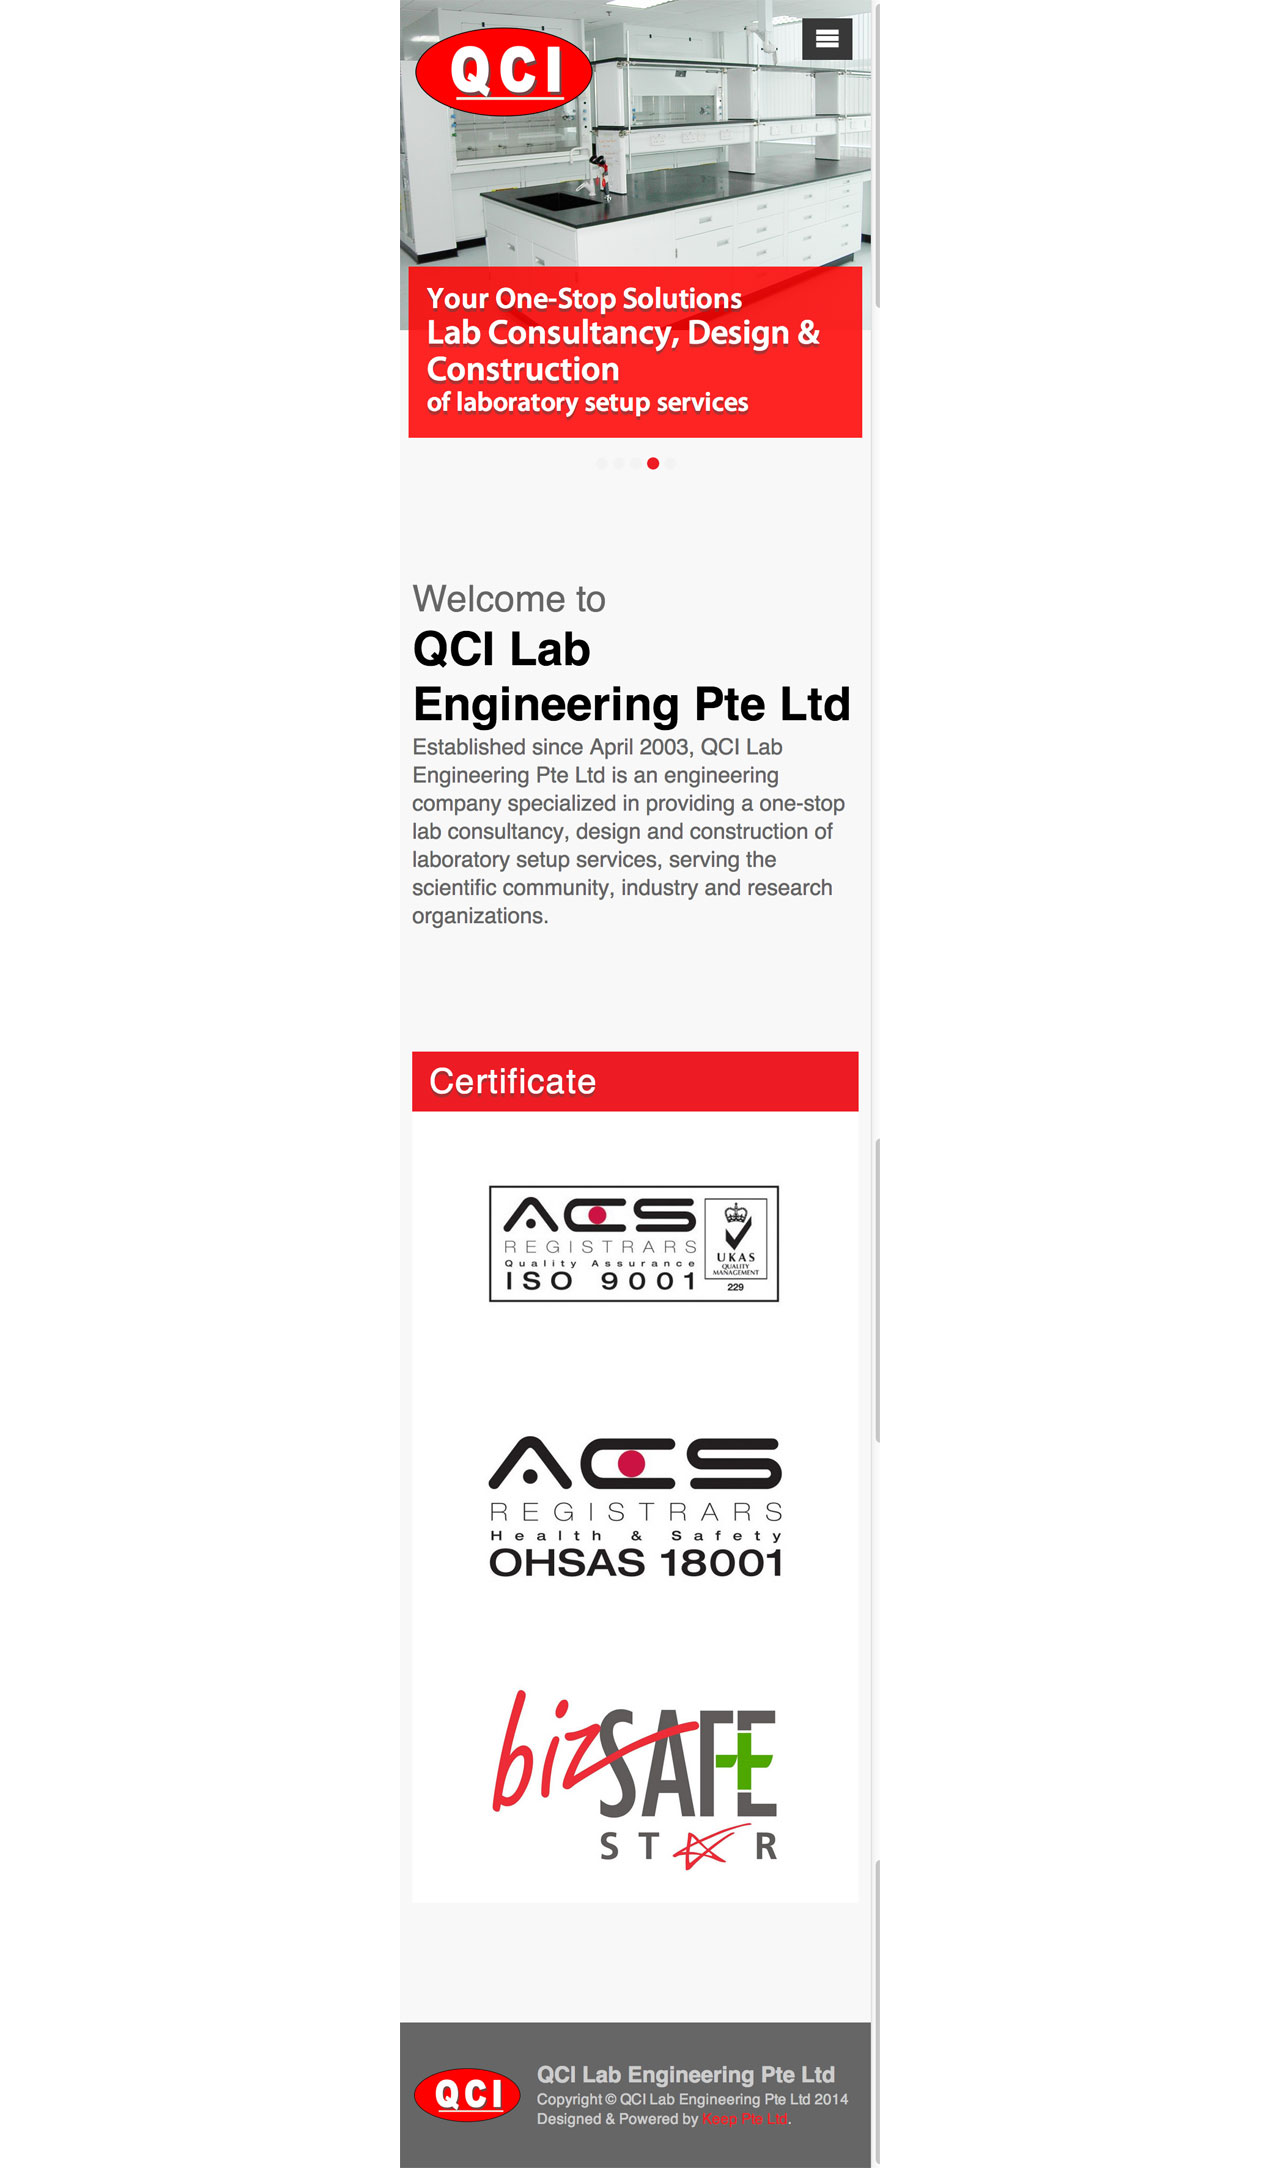 Qci Lab Engineering Pte. Ltd. website homepage on mobile